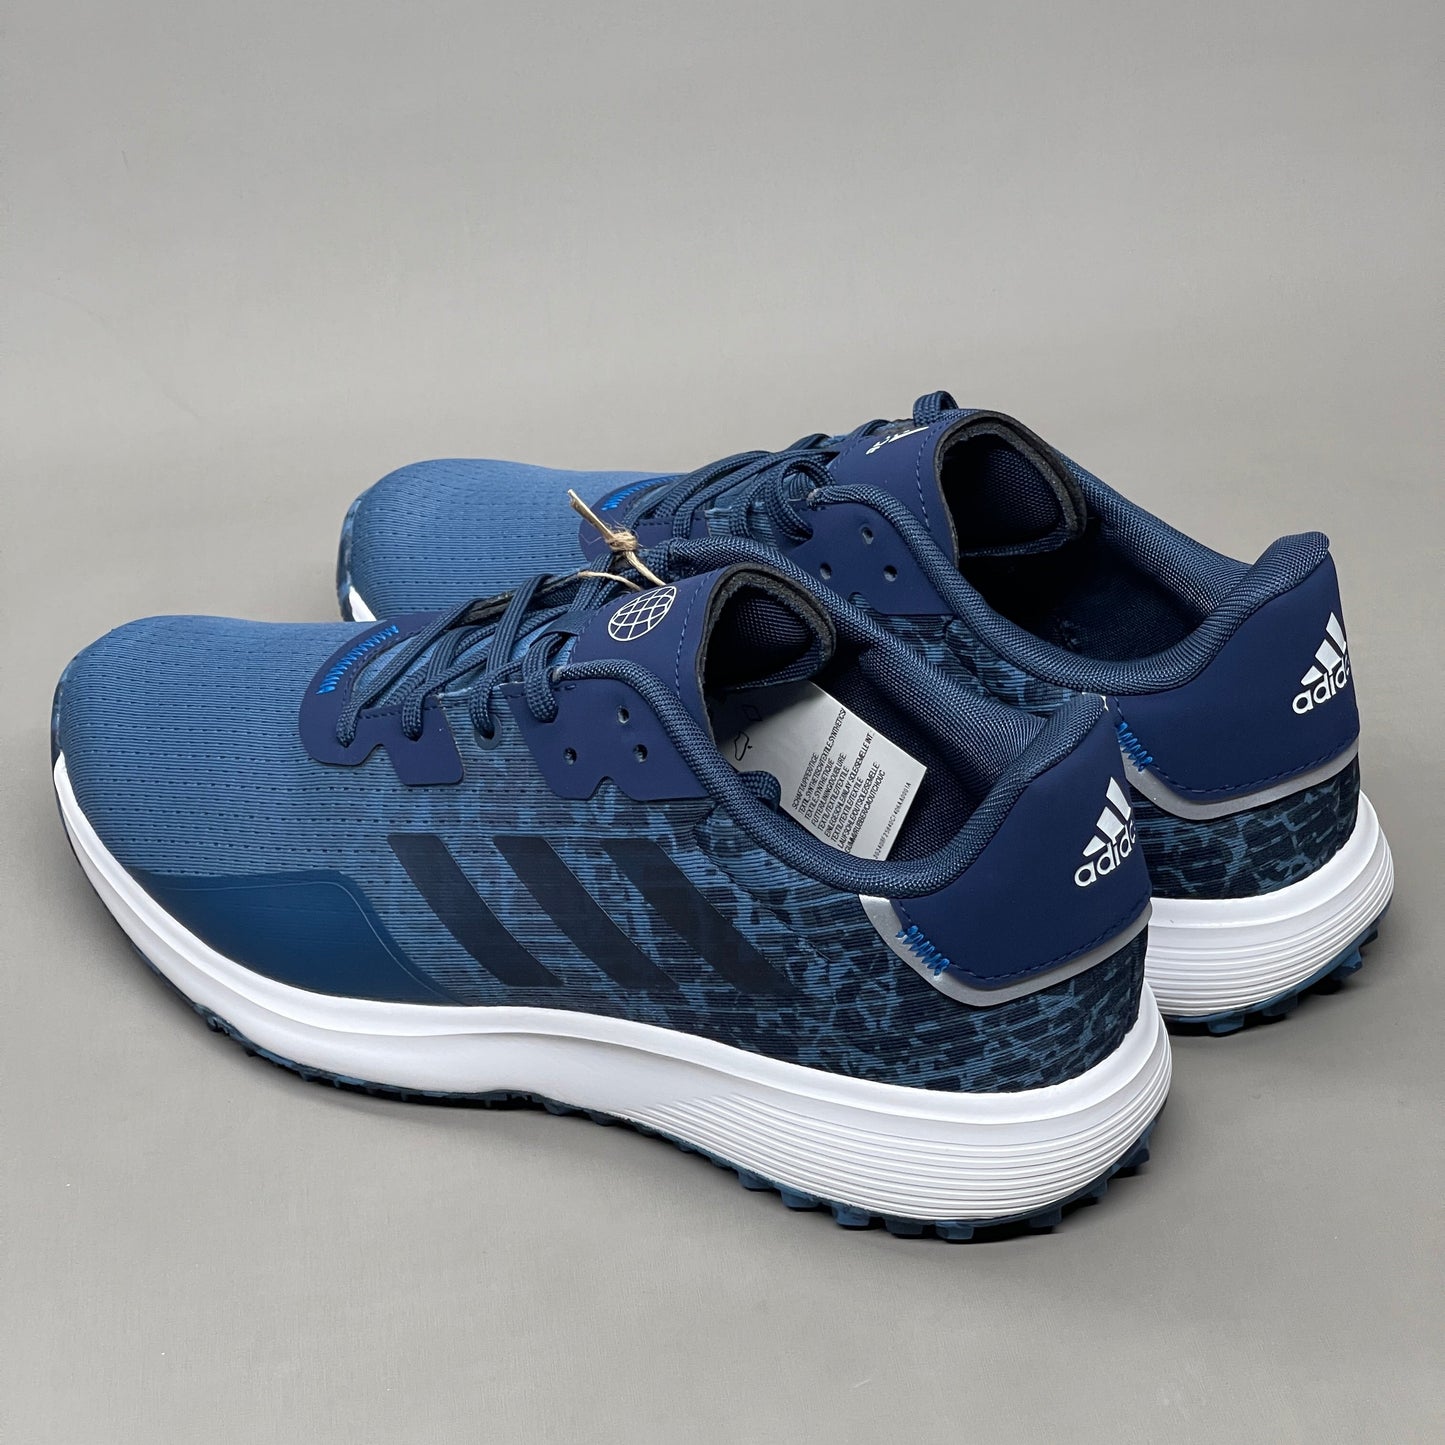 ADIDAS Golf Shoes S2G SL Waterproof Men's Sz 8.5 Blue / Navy / White GV9794 (New)